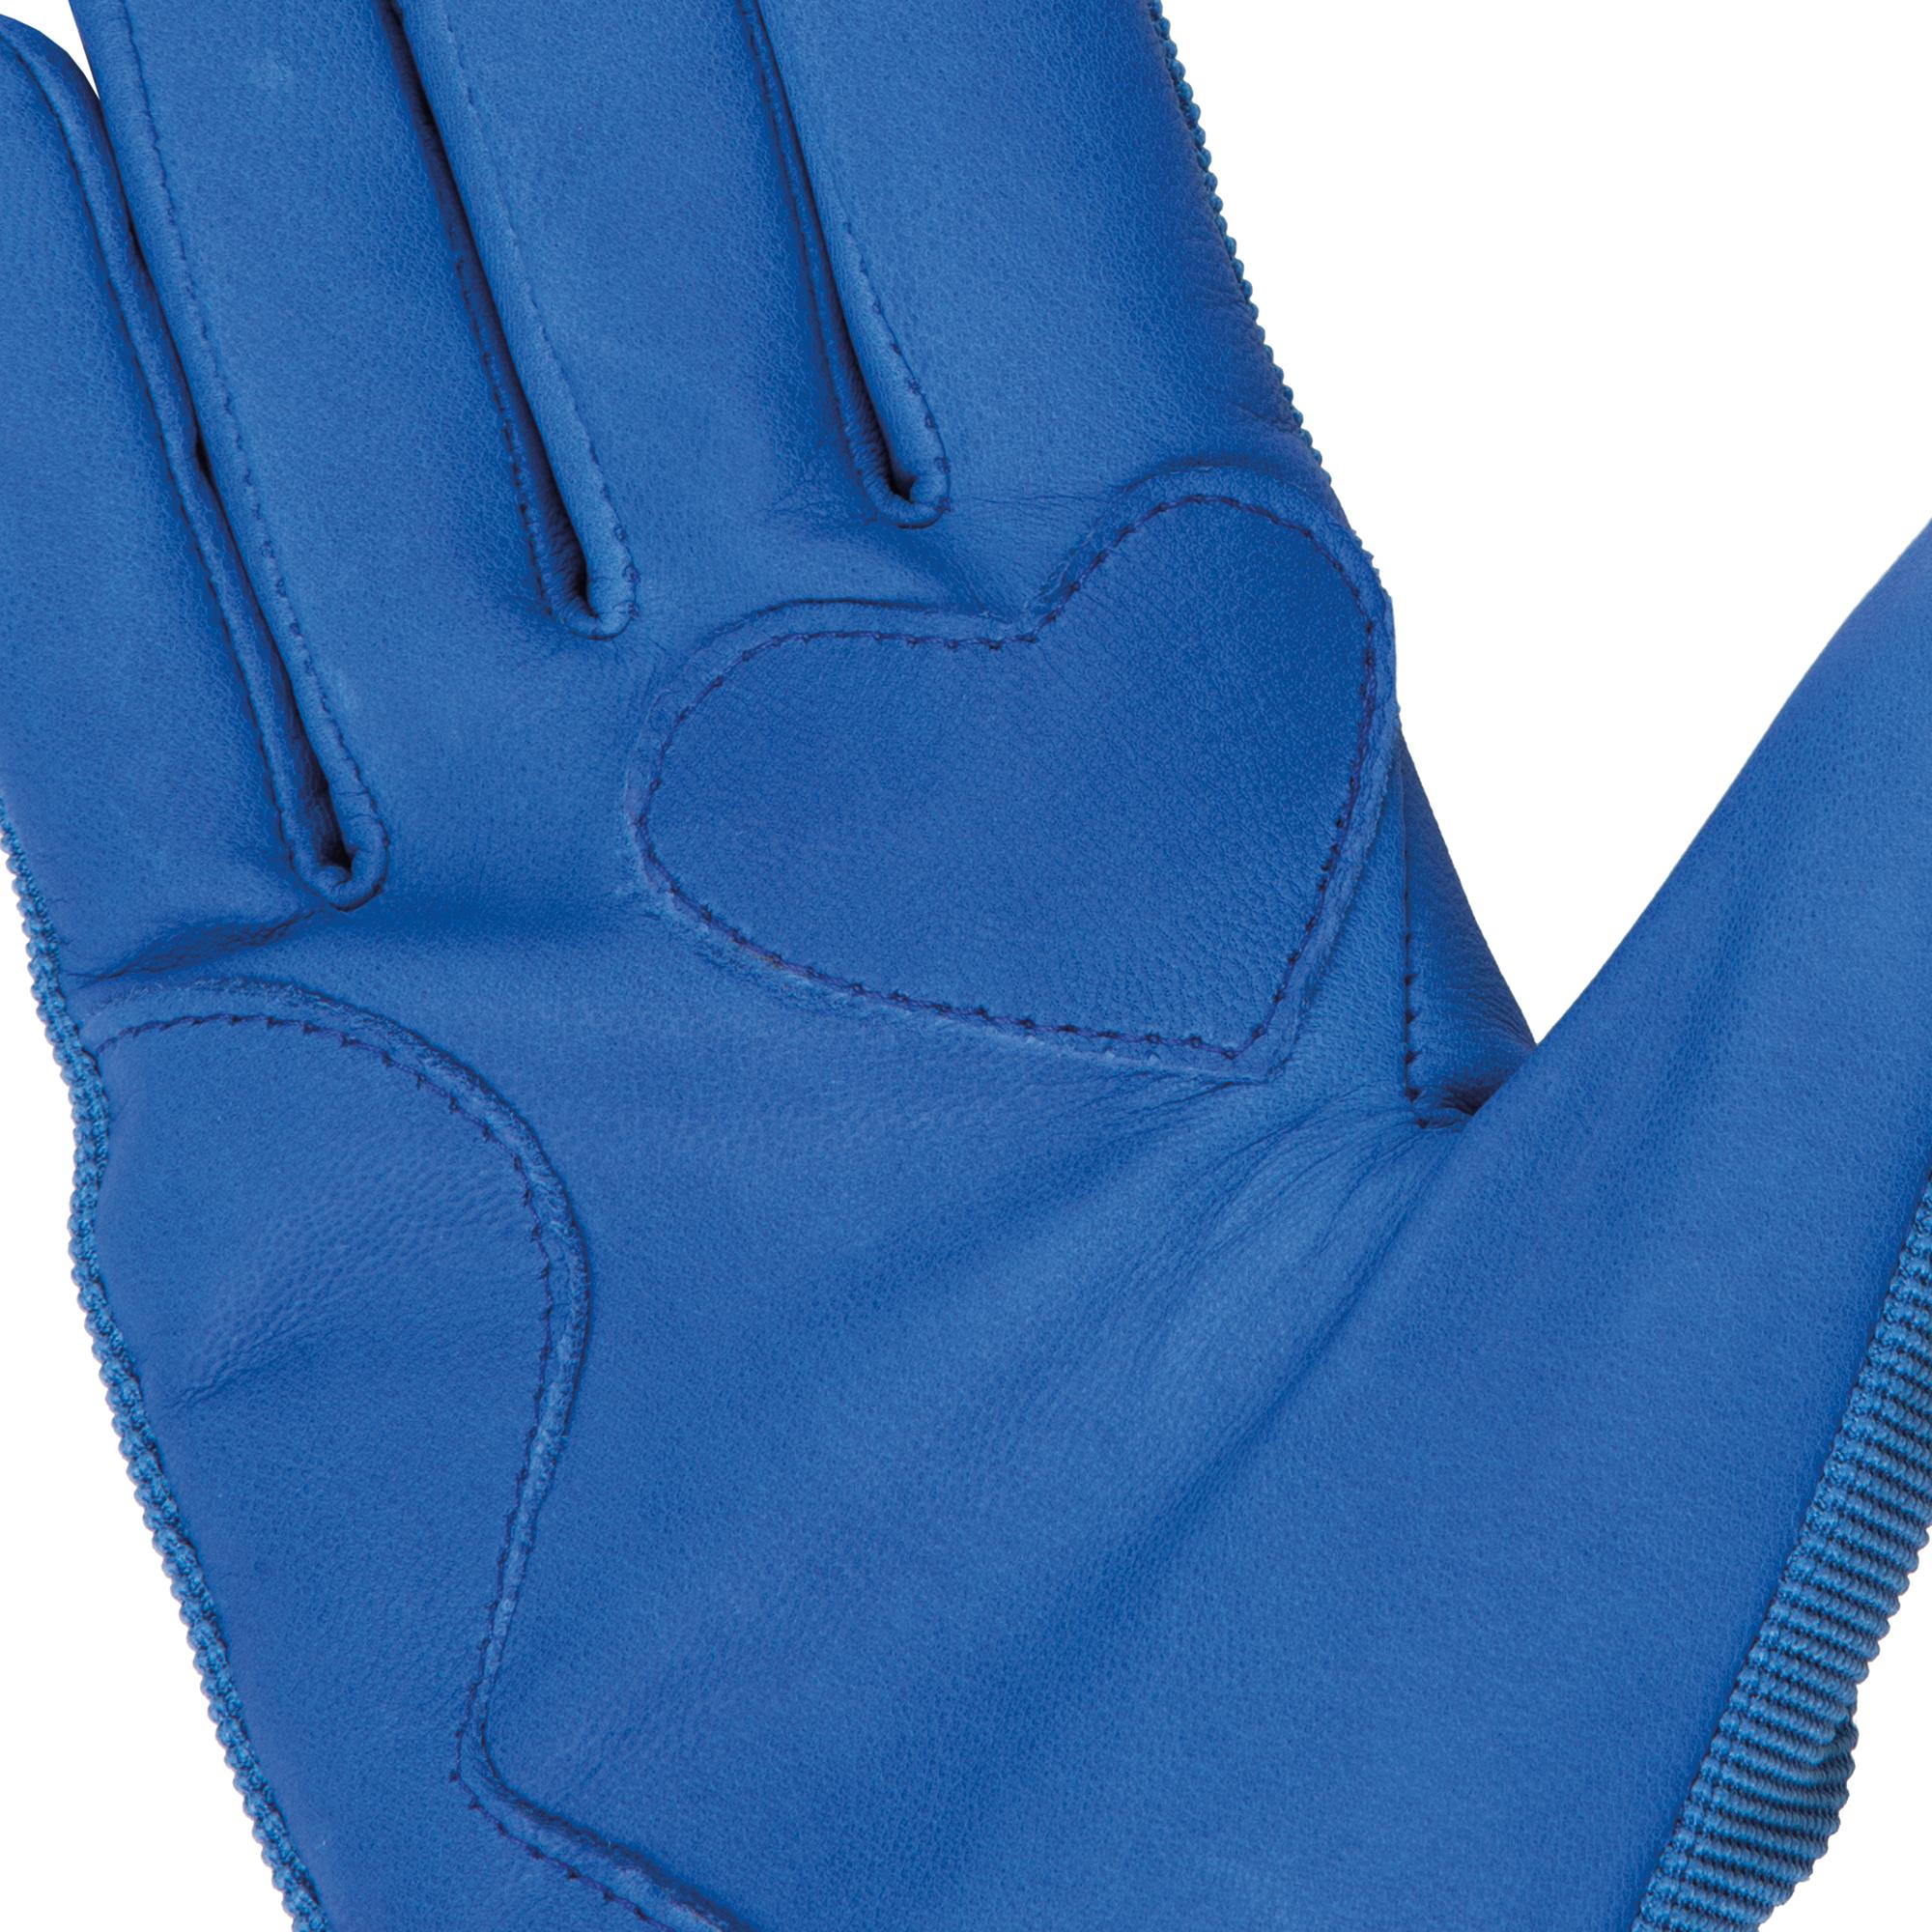 Gloves Eva Guant Light Blue Tucano Urbano